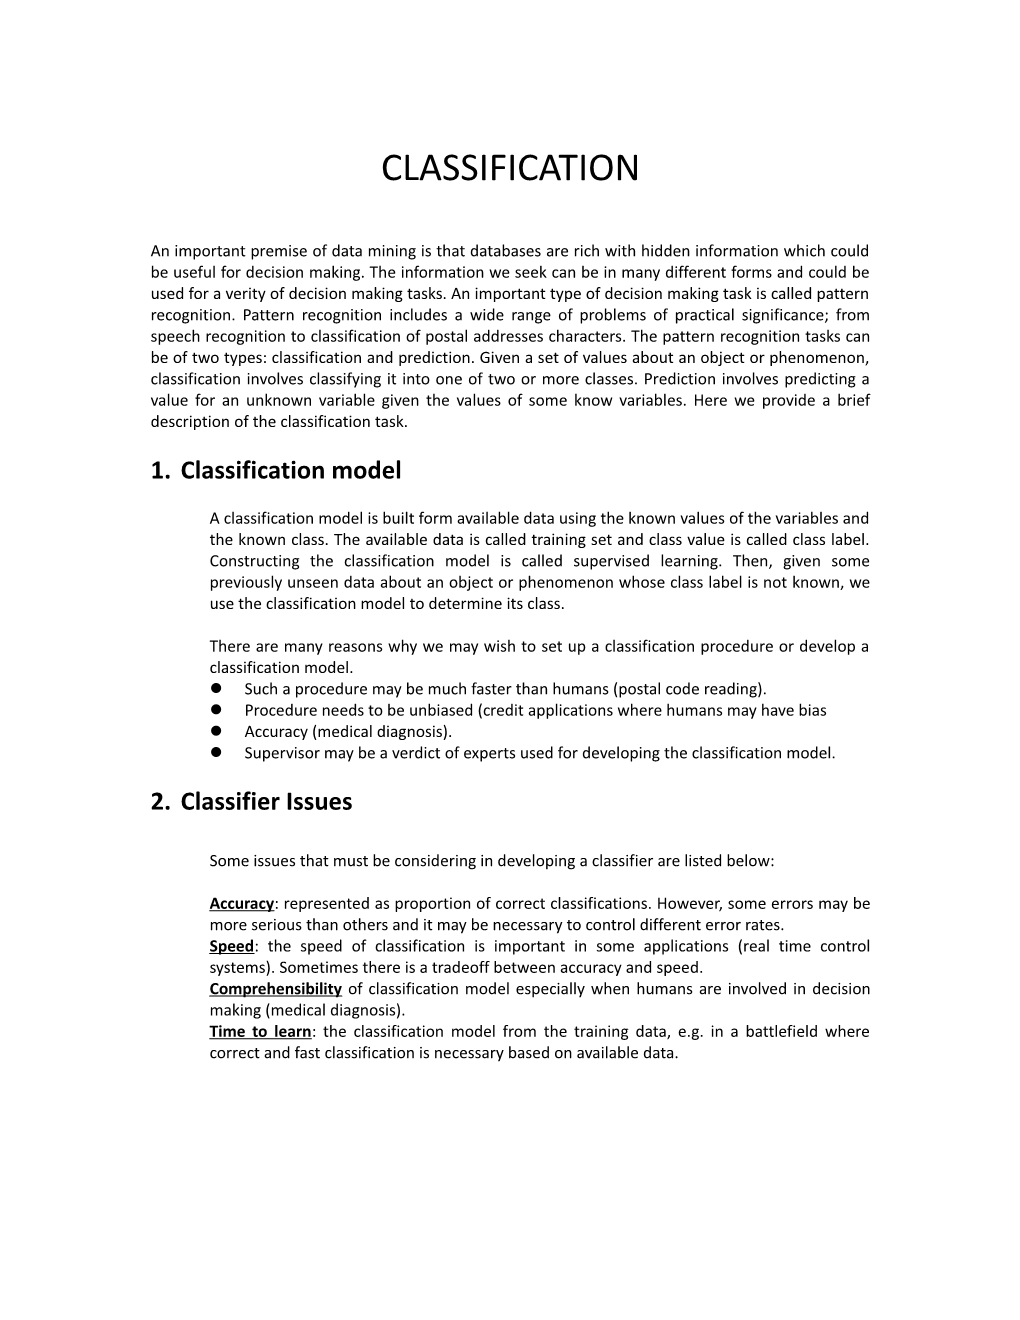 1. Classification Model